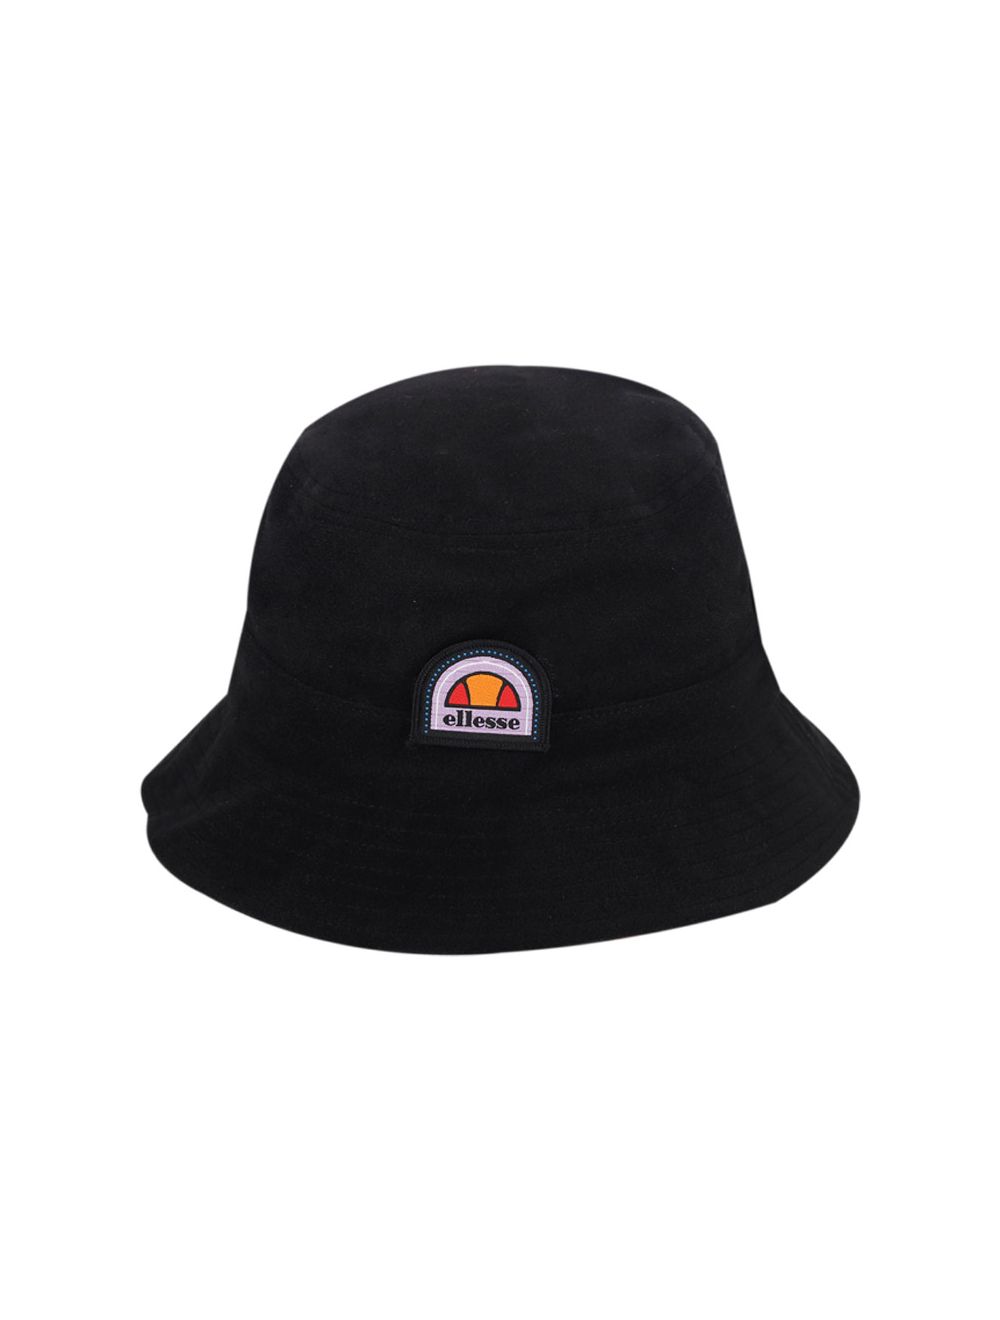 Shop Ellesse Velcro Mens Bucket Hat Black